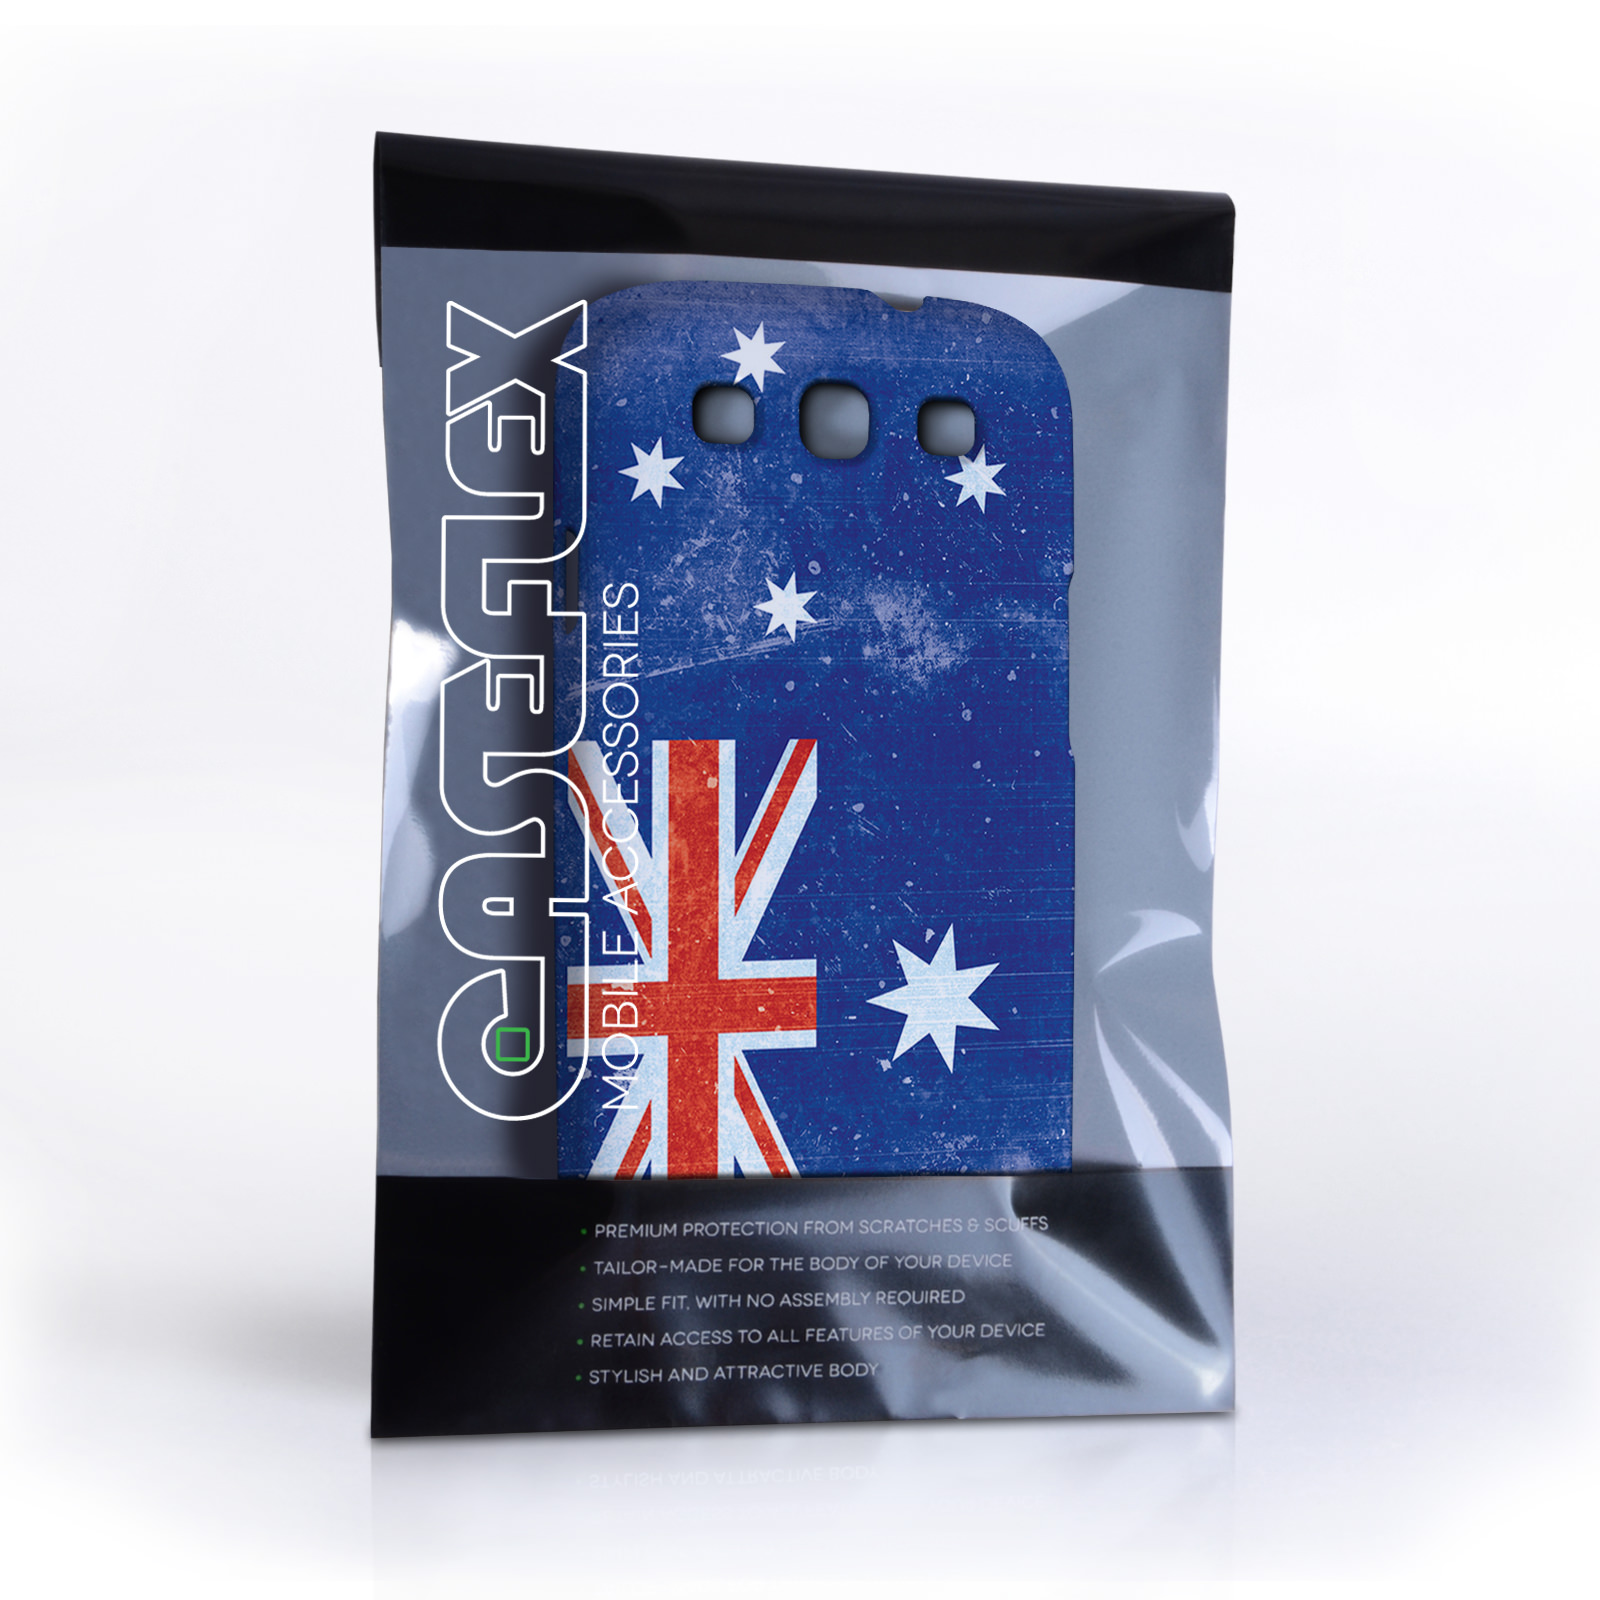 Caseflex Samsung Galaxy S3 Retro Australia Flag Case